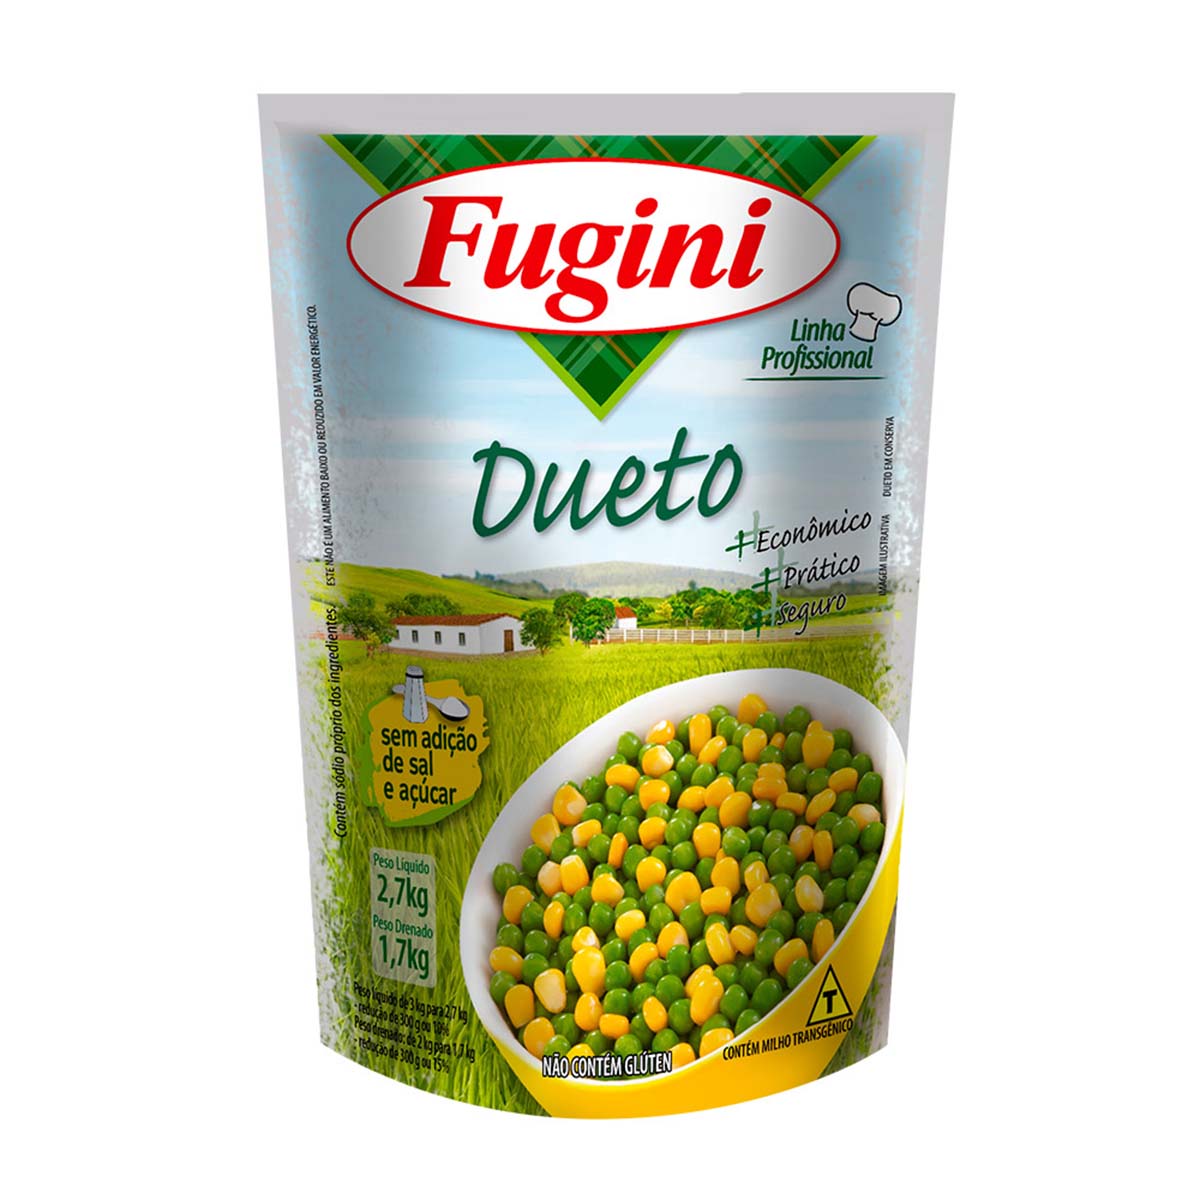 DUETO SACHE FUGINI 6 X 1,7 KG FOOD